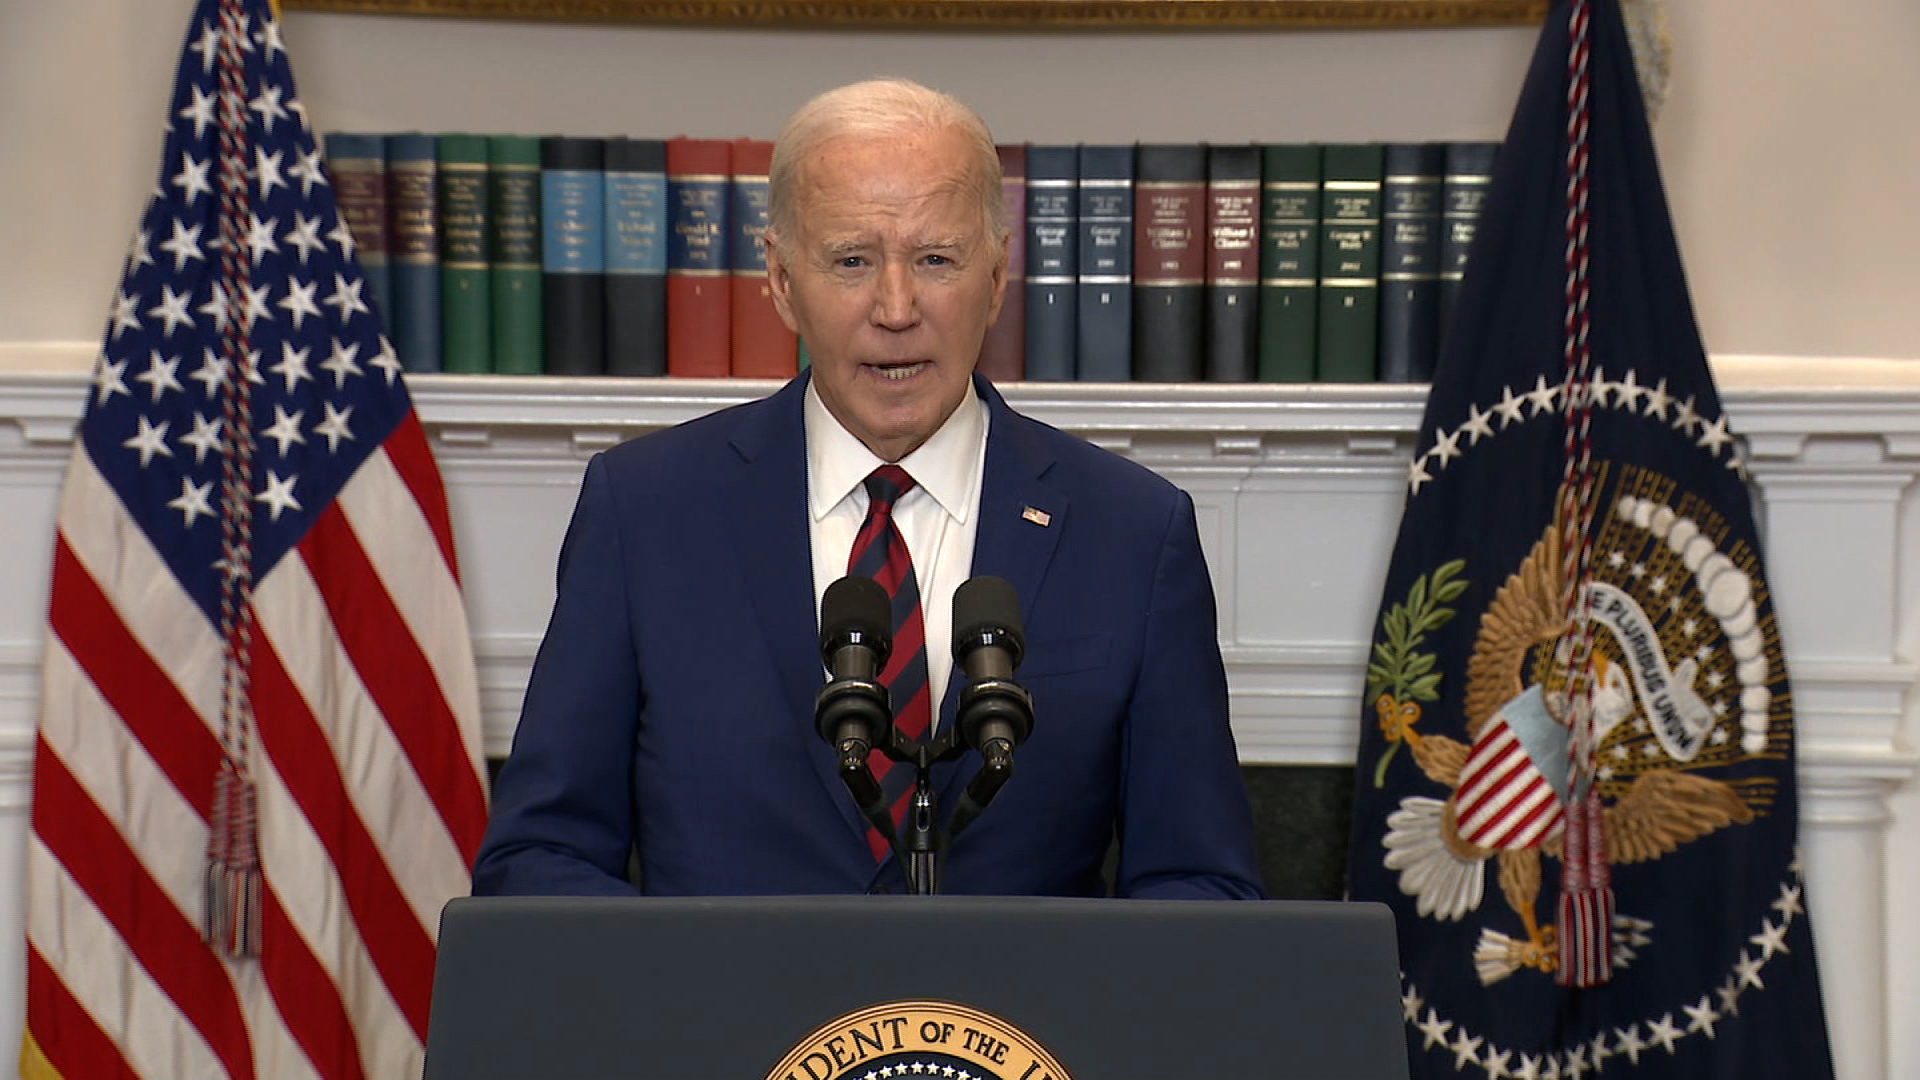 President Joe Biden gives remarks on Tuesday at the White House in Washington, DC.